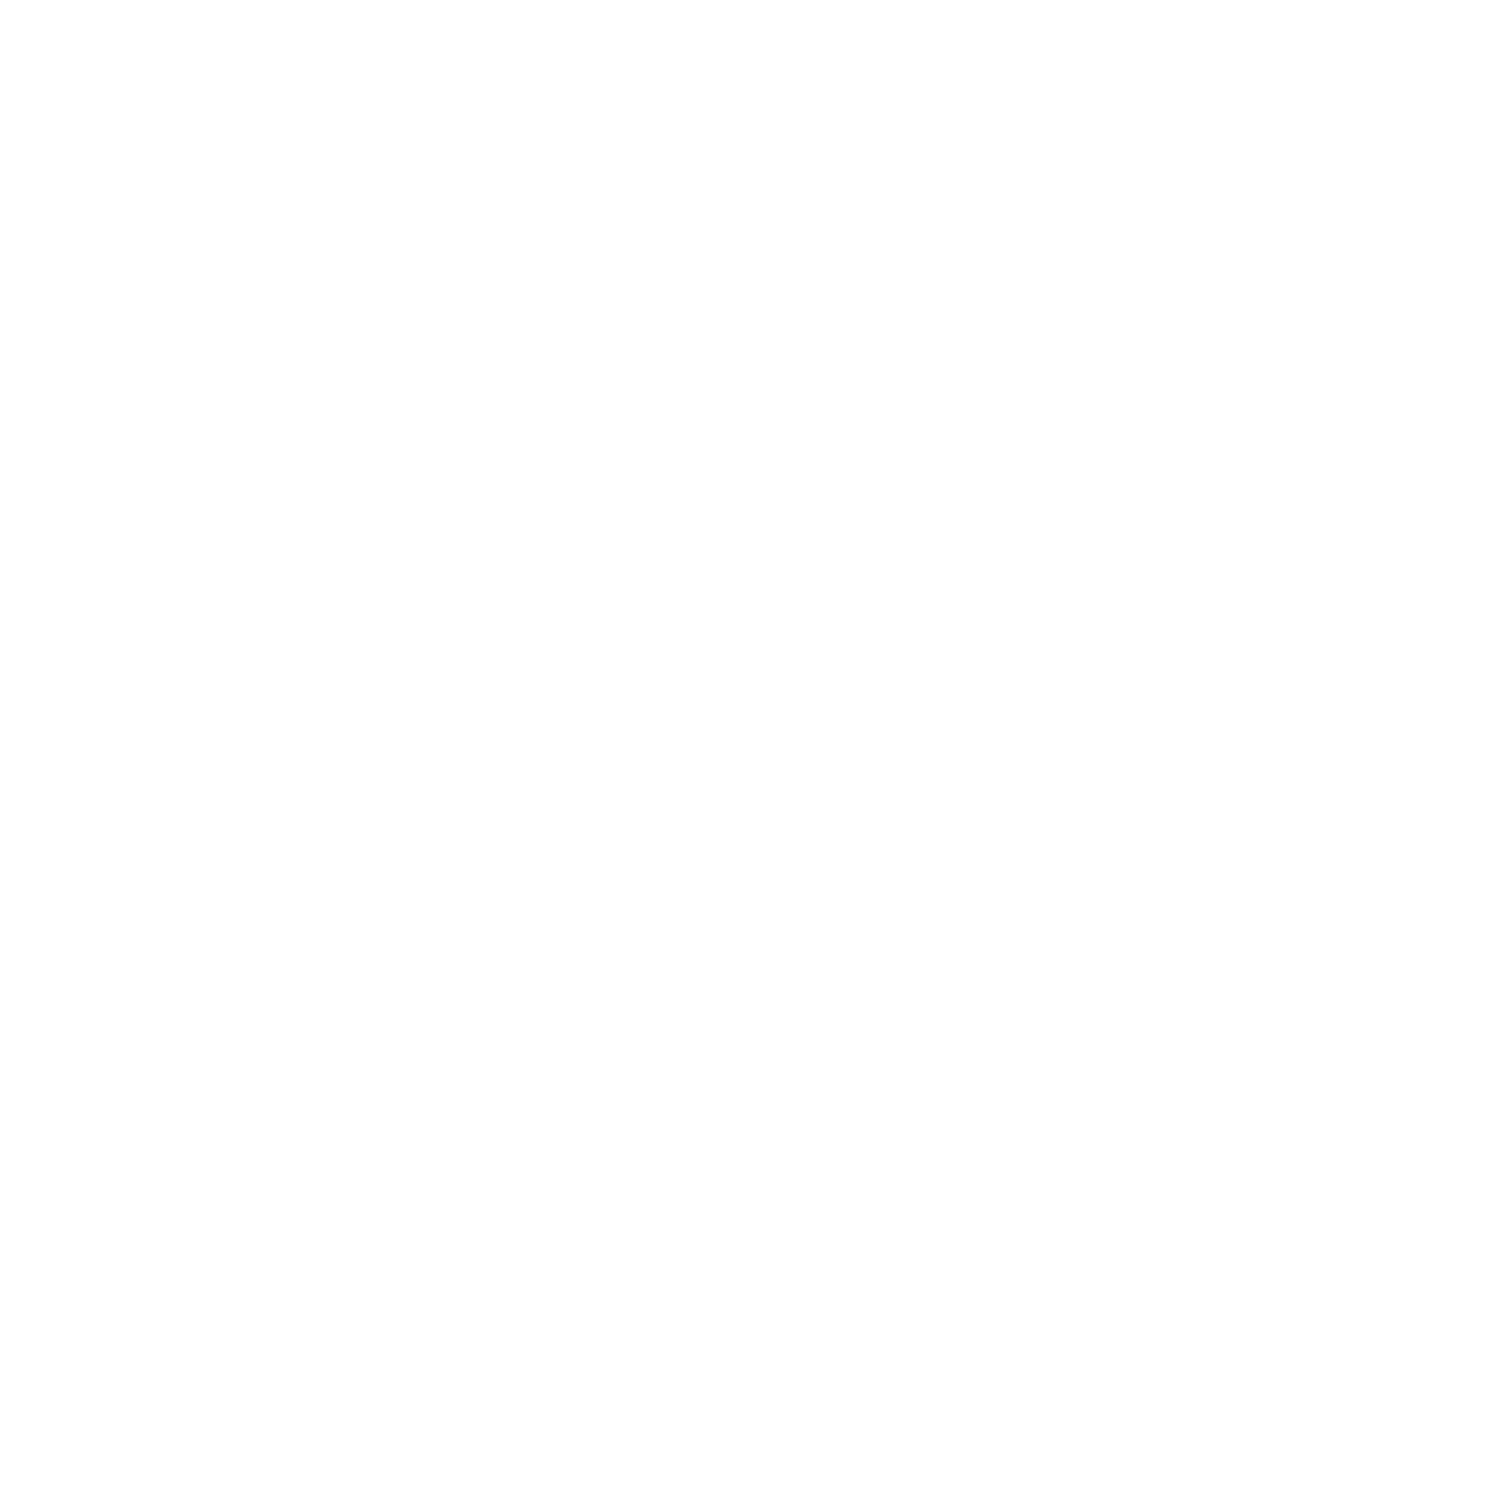 Caan Rose Estates Ltd - Slough : Letting agents in Ashford Surrey